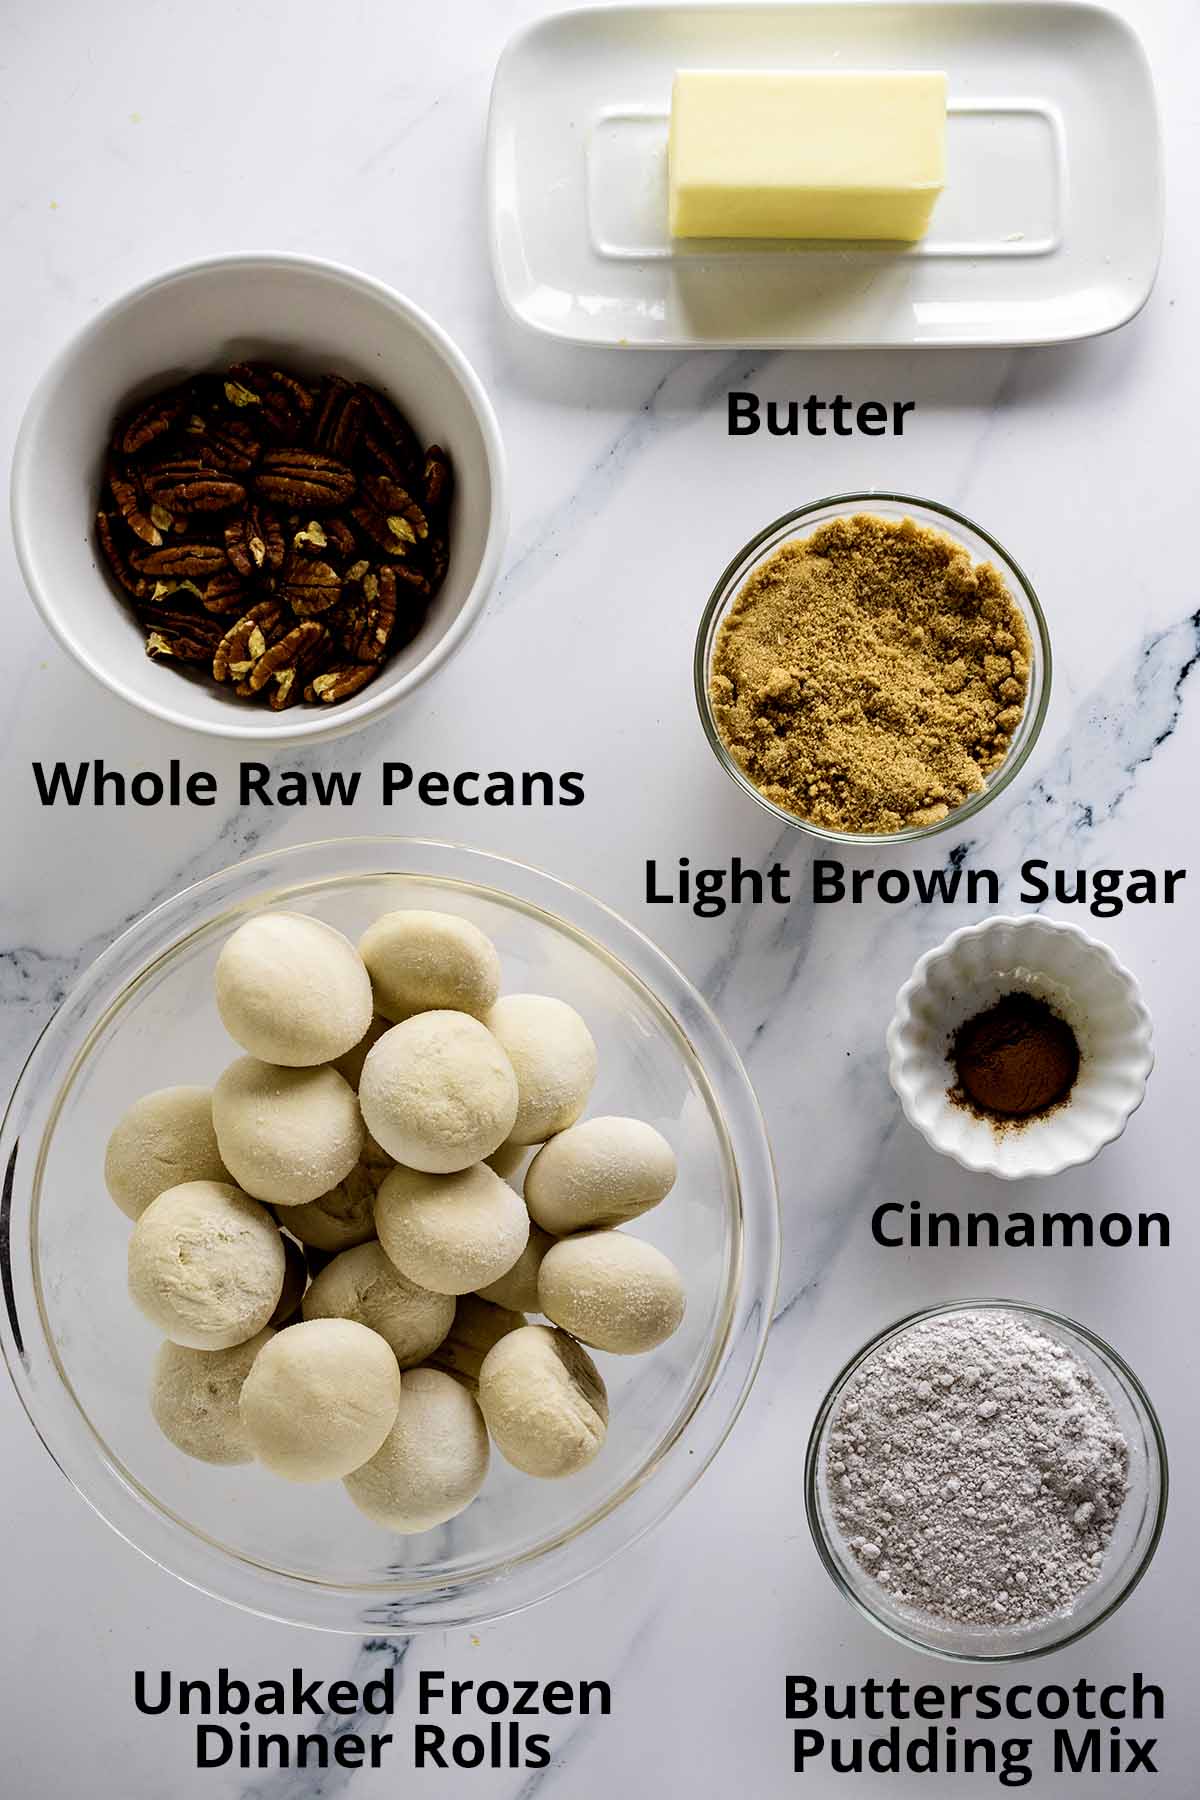 Caramel pull apart rolls ingredients